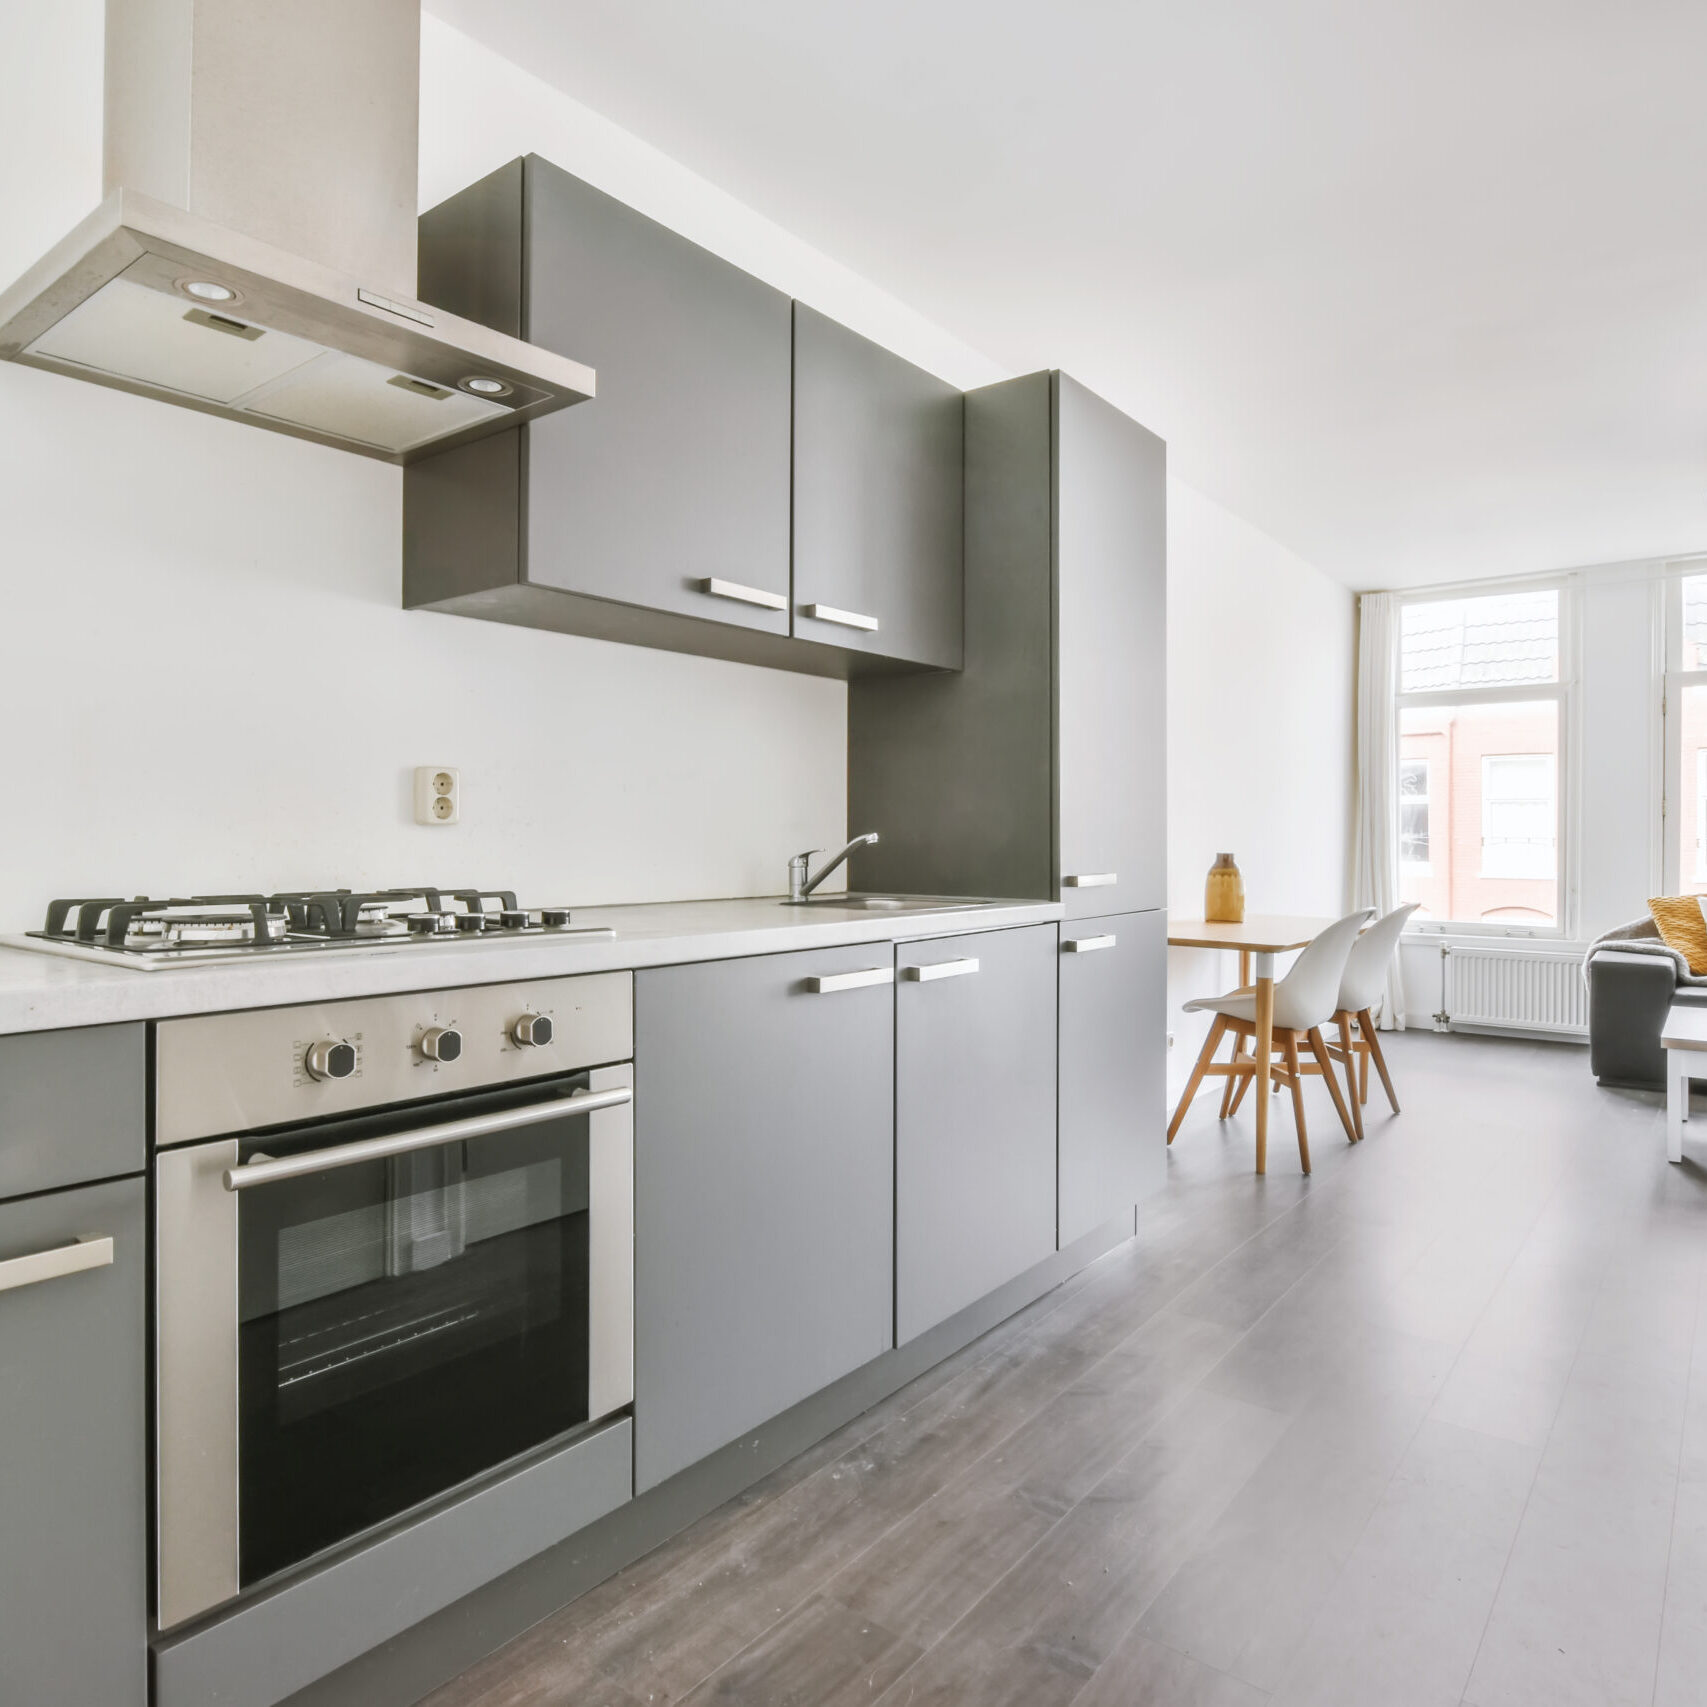 Elegant and cozy kitchen with gray kitchen unit